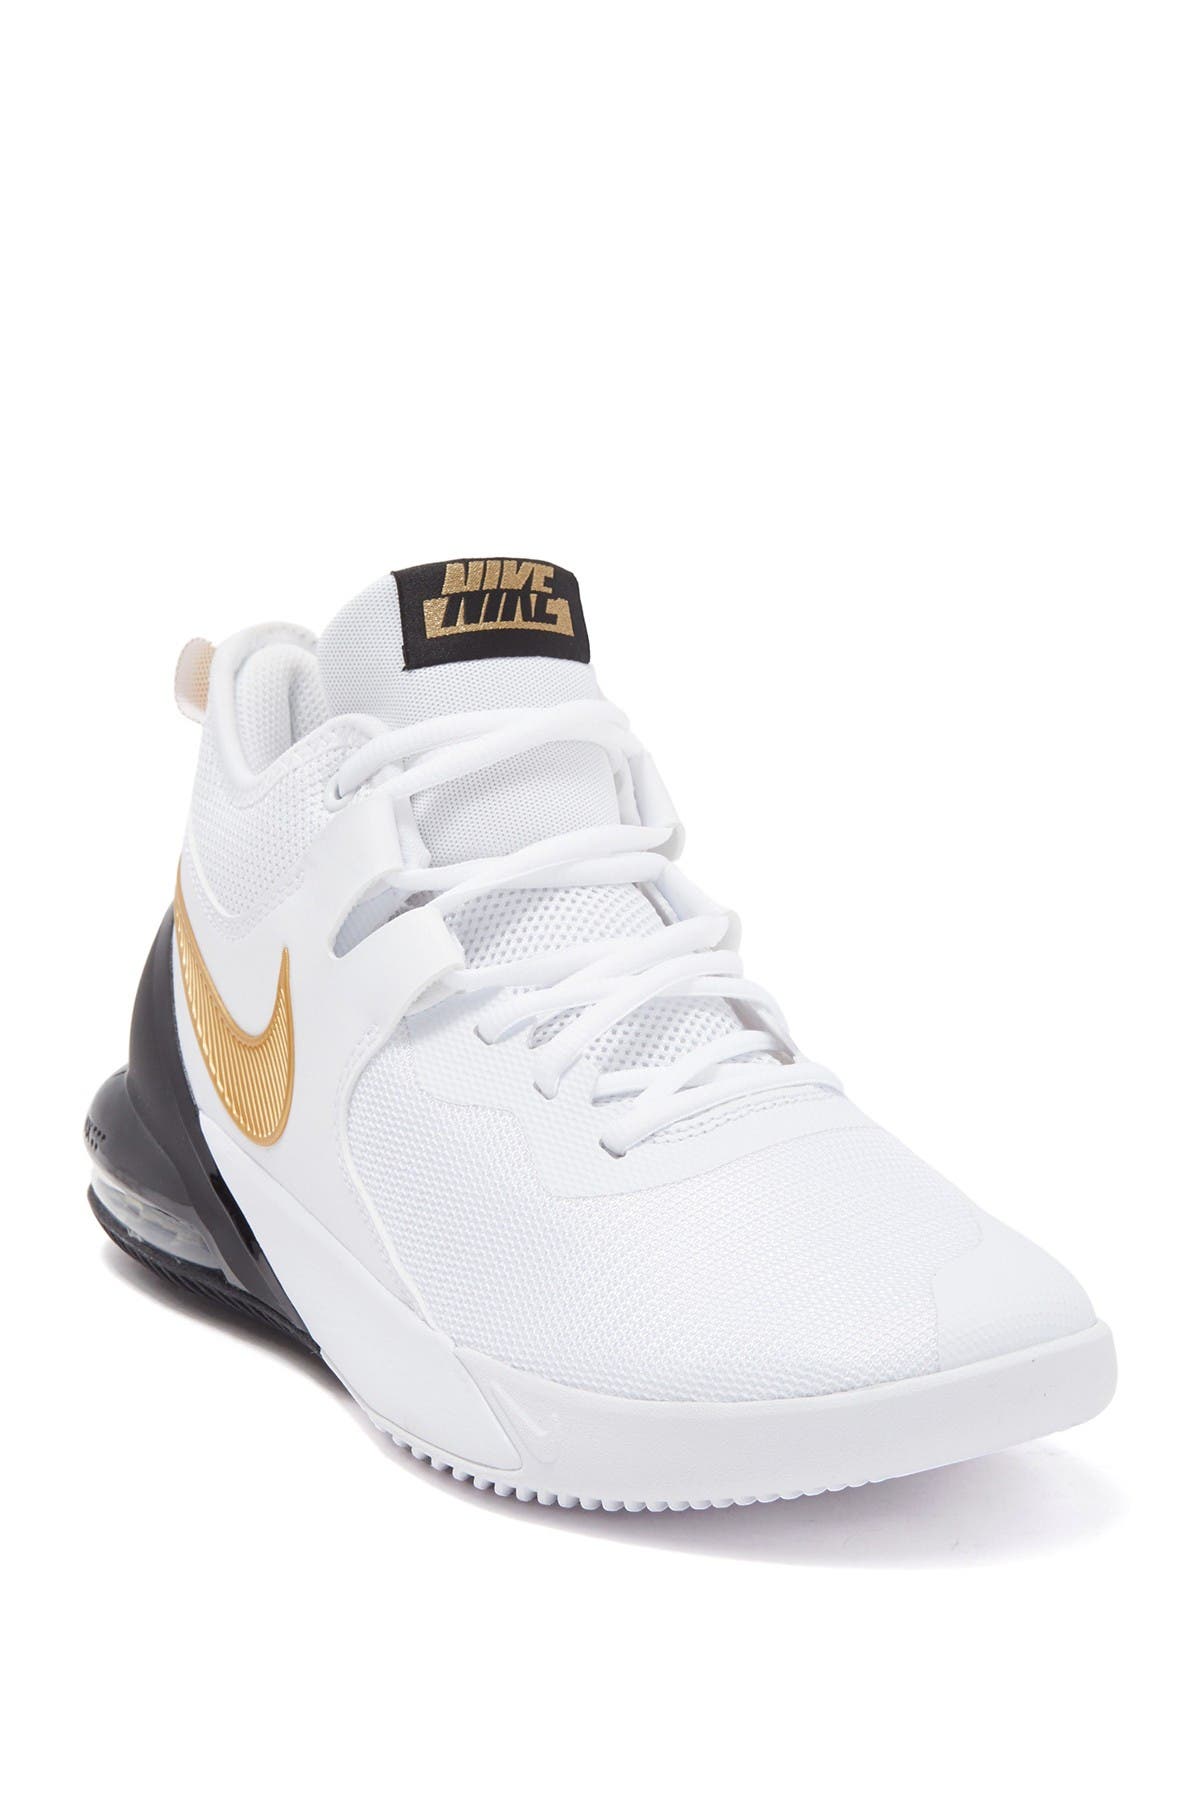 Nike | Air Max Impact Basketball Shoe 